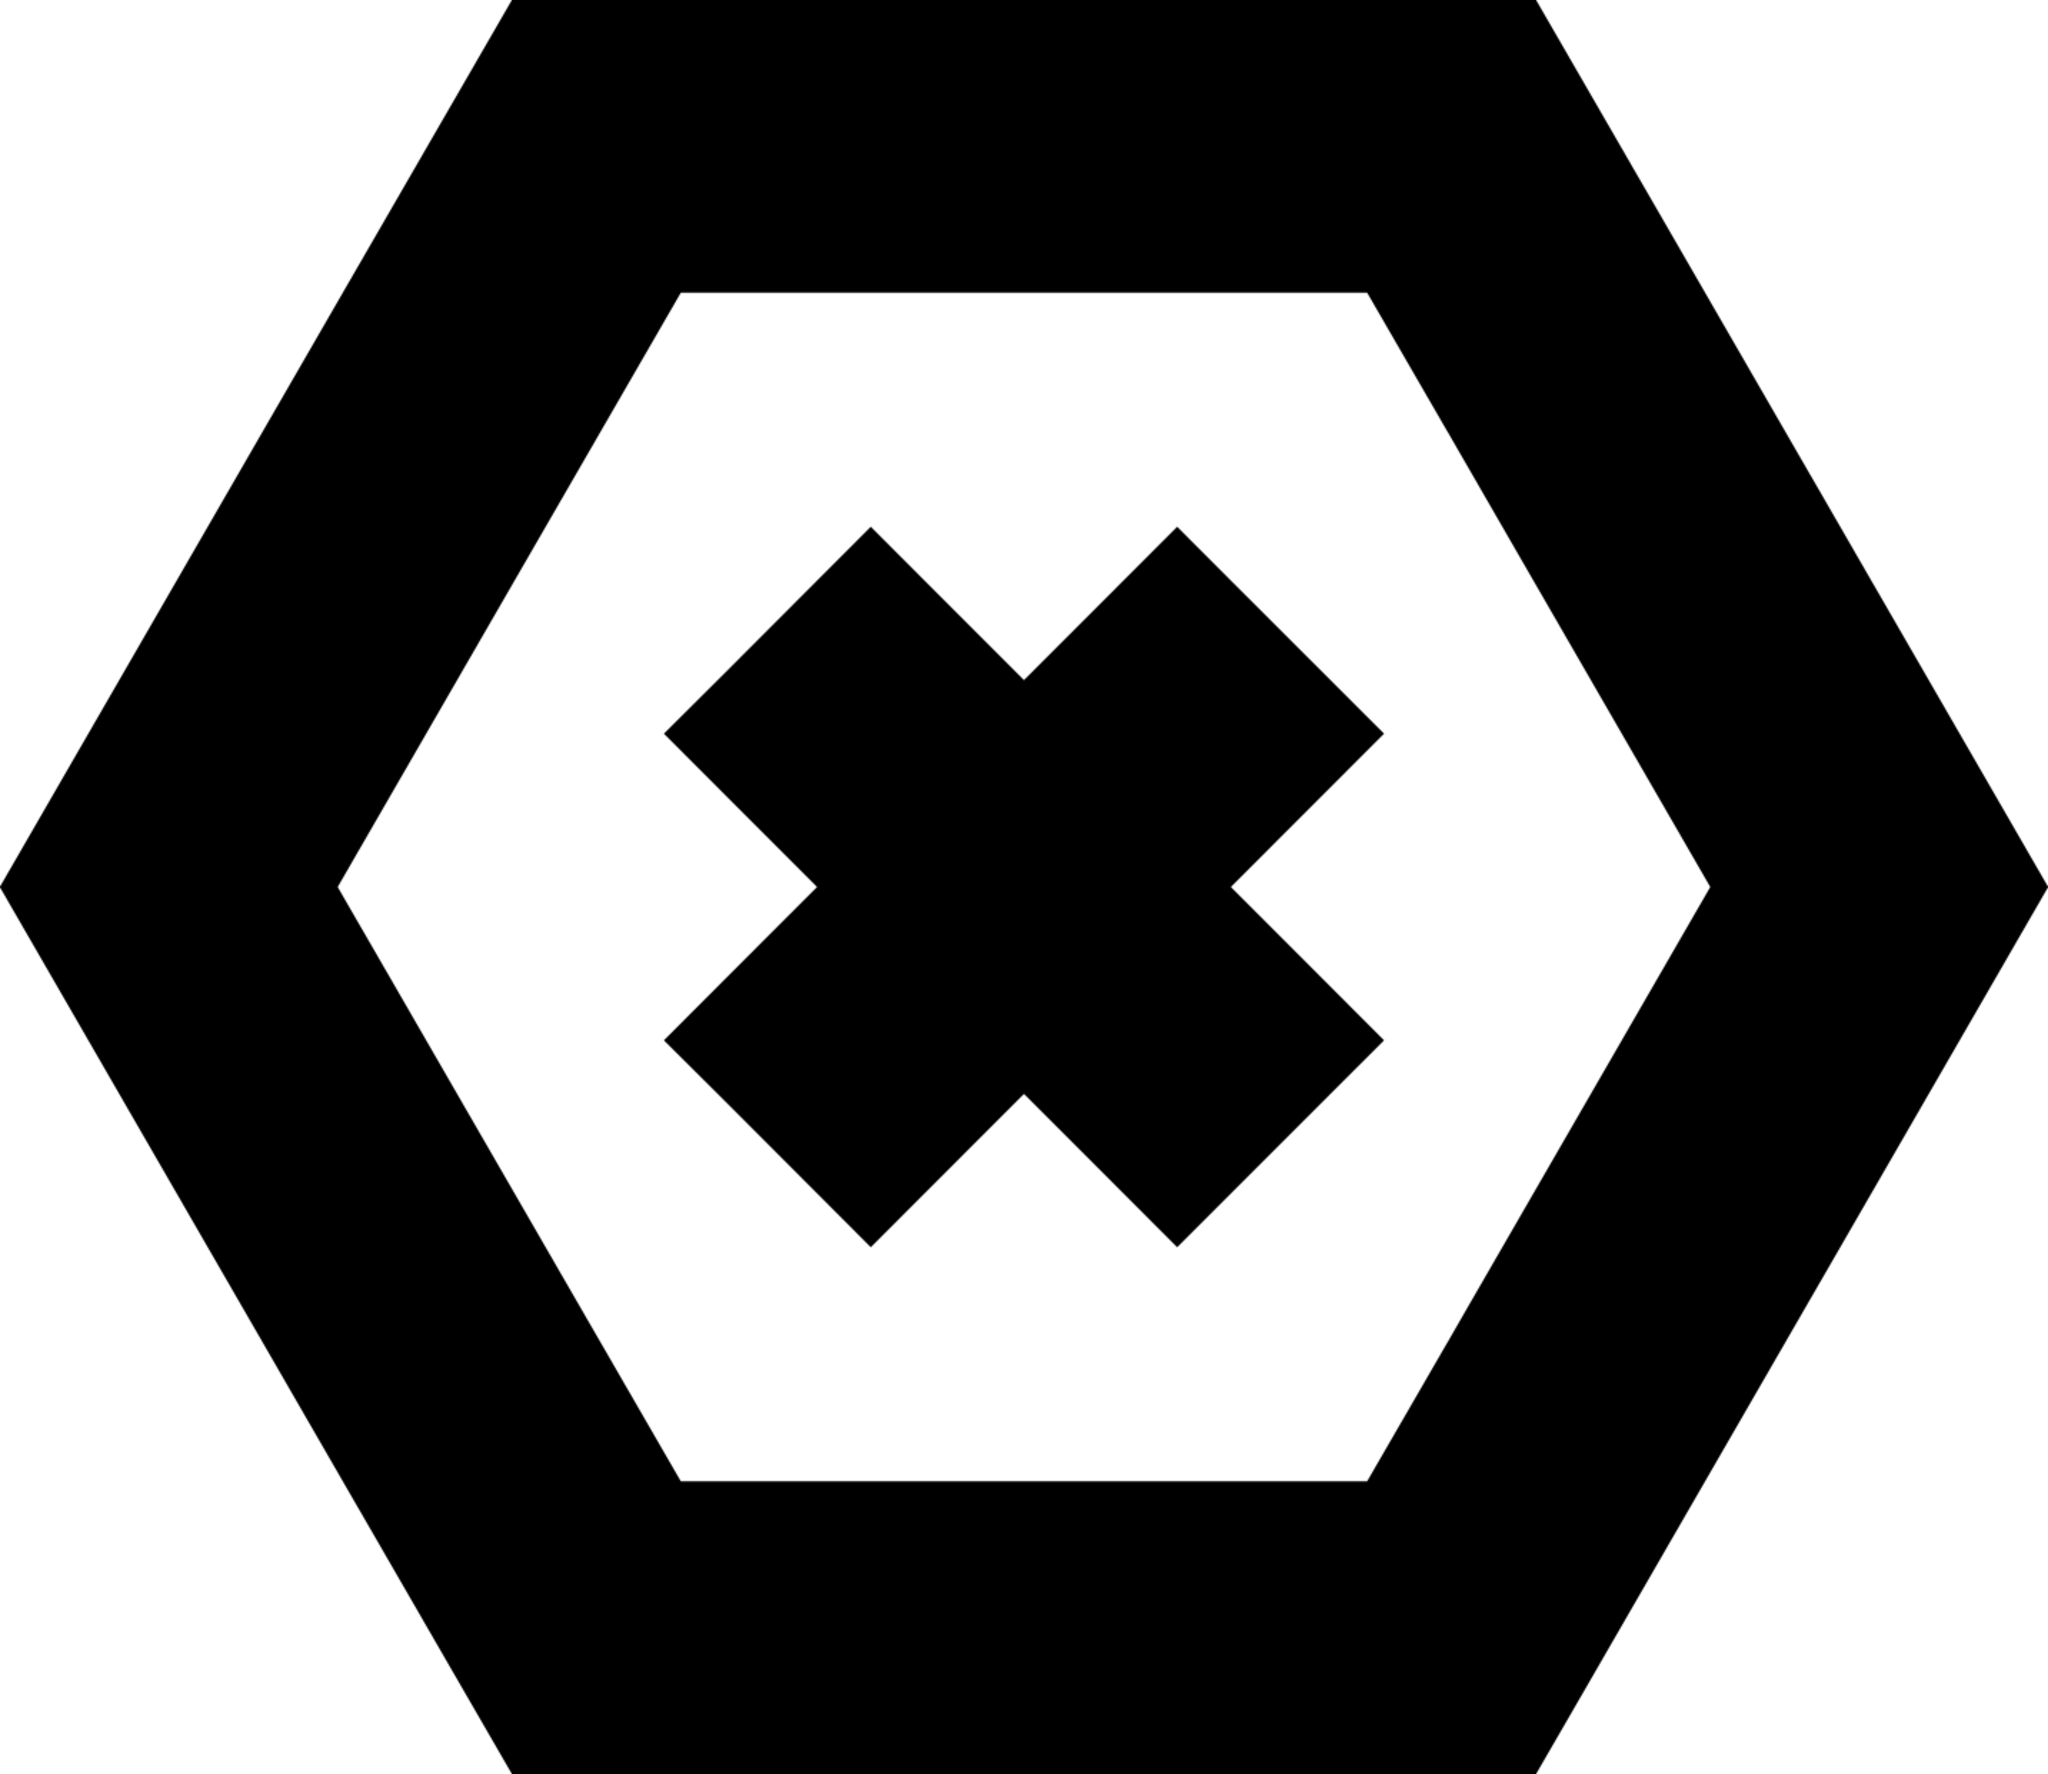 Cross hexagon icon